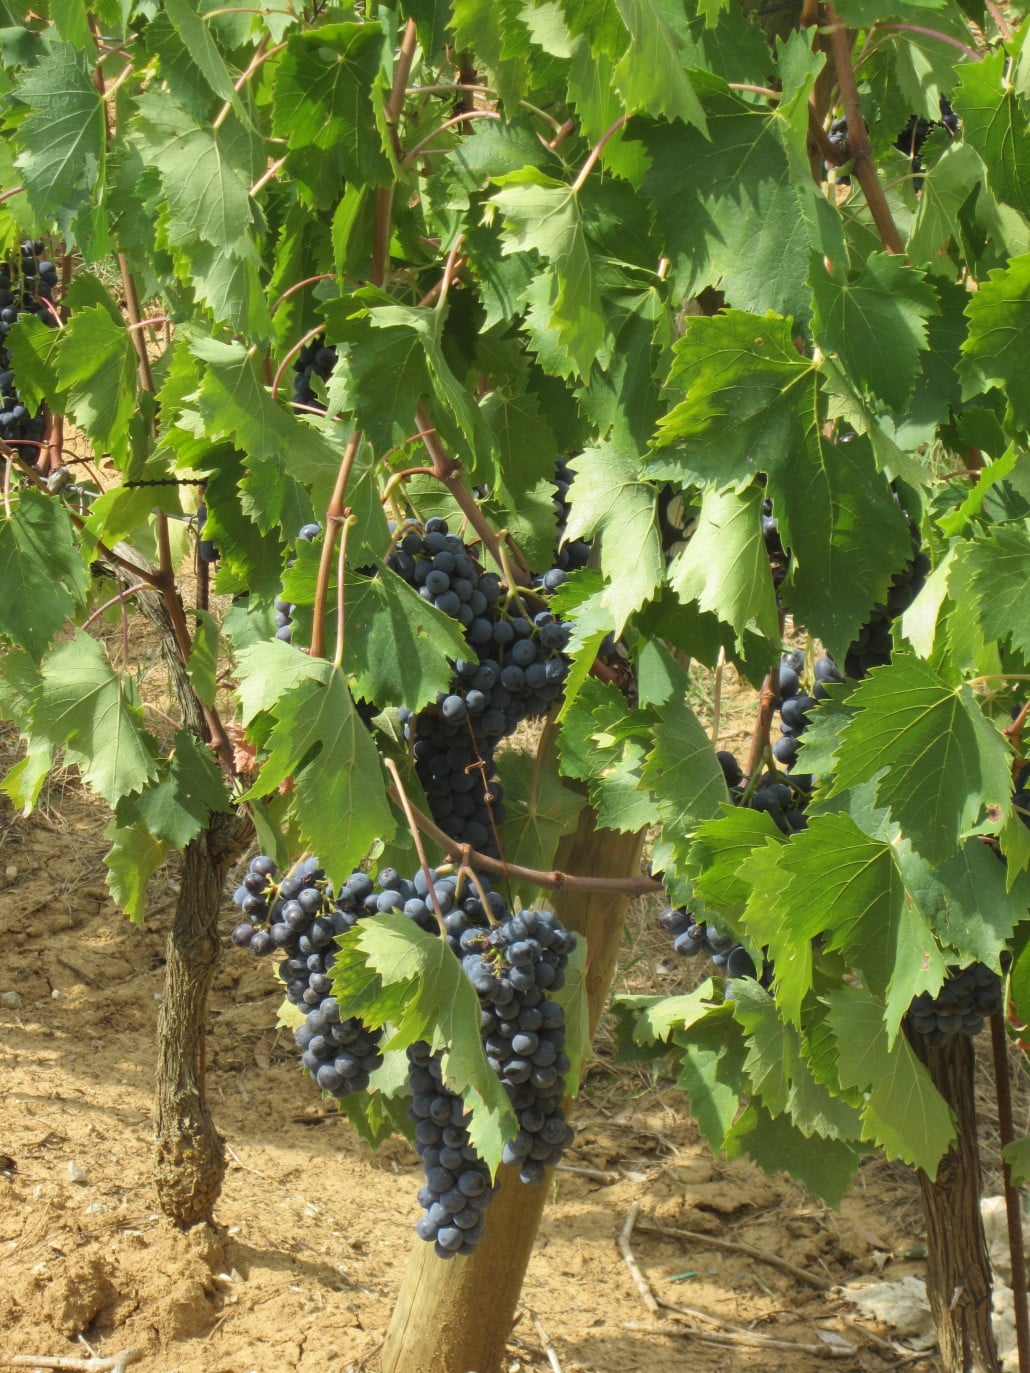 Beautiful vineyards everywhere